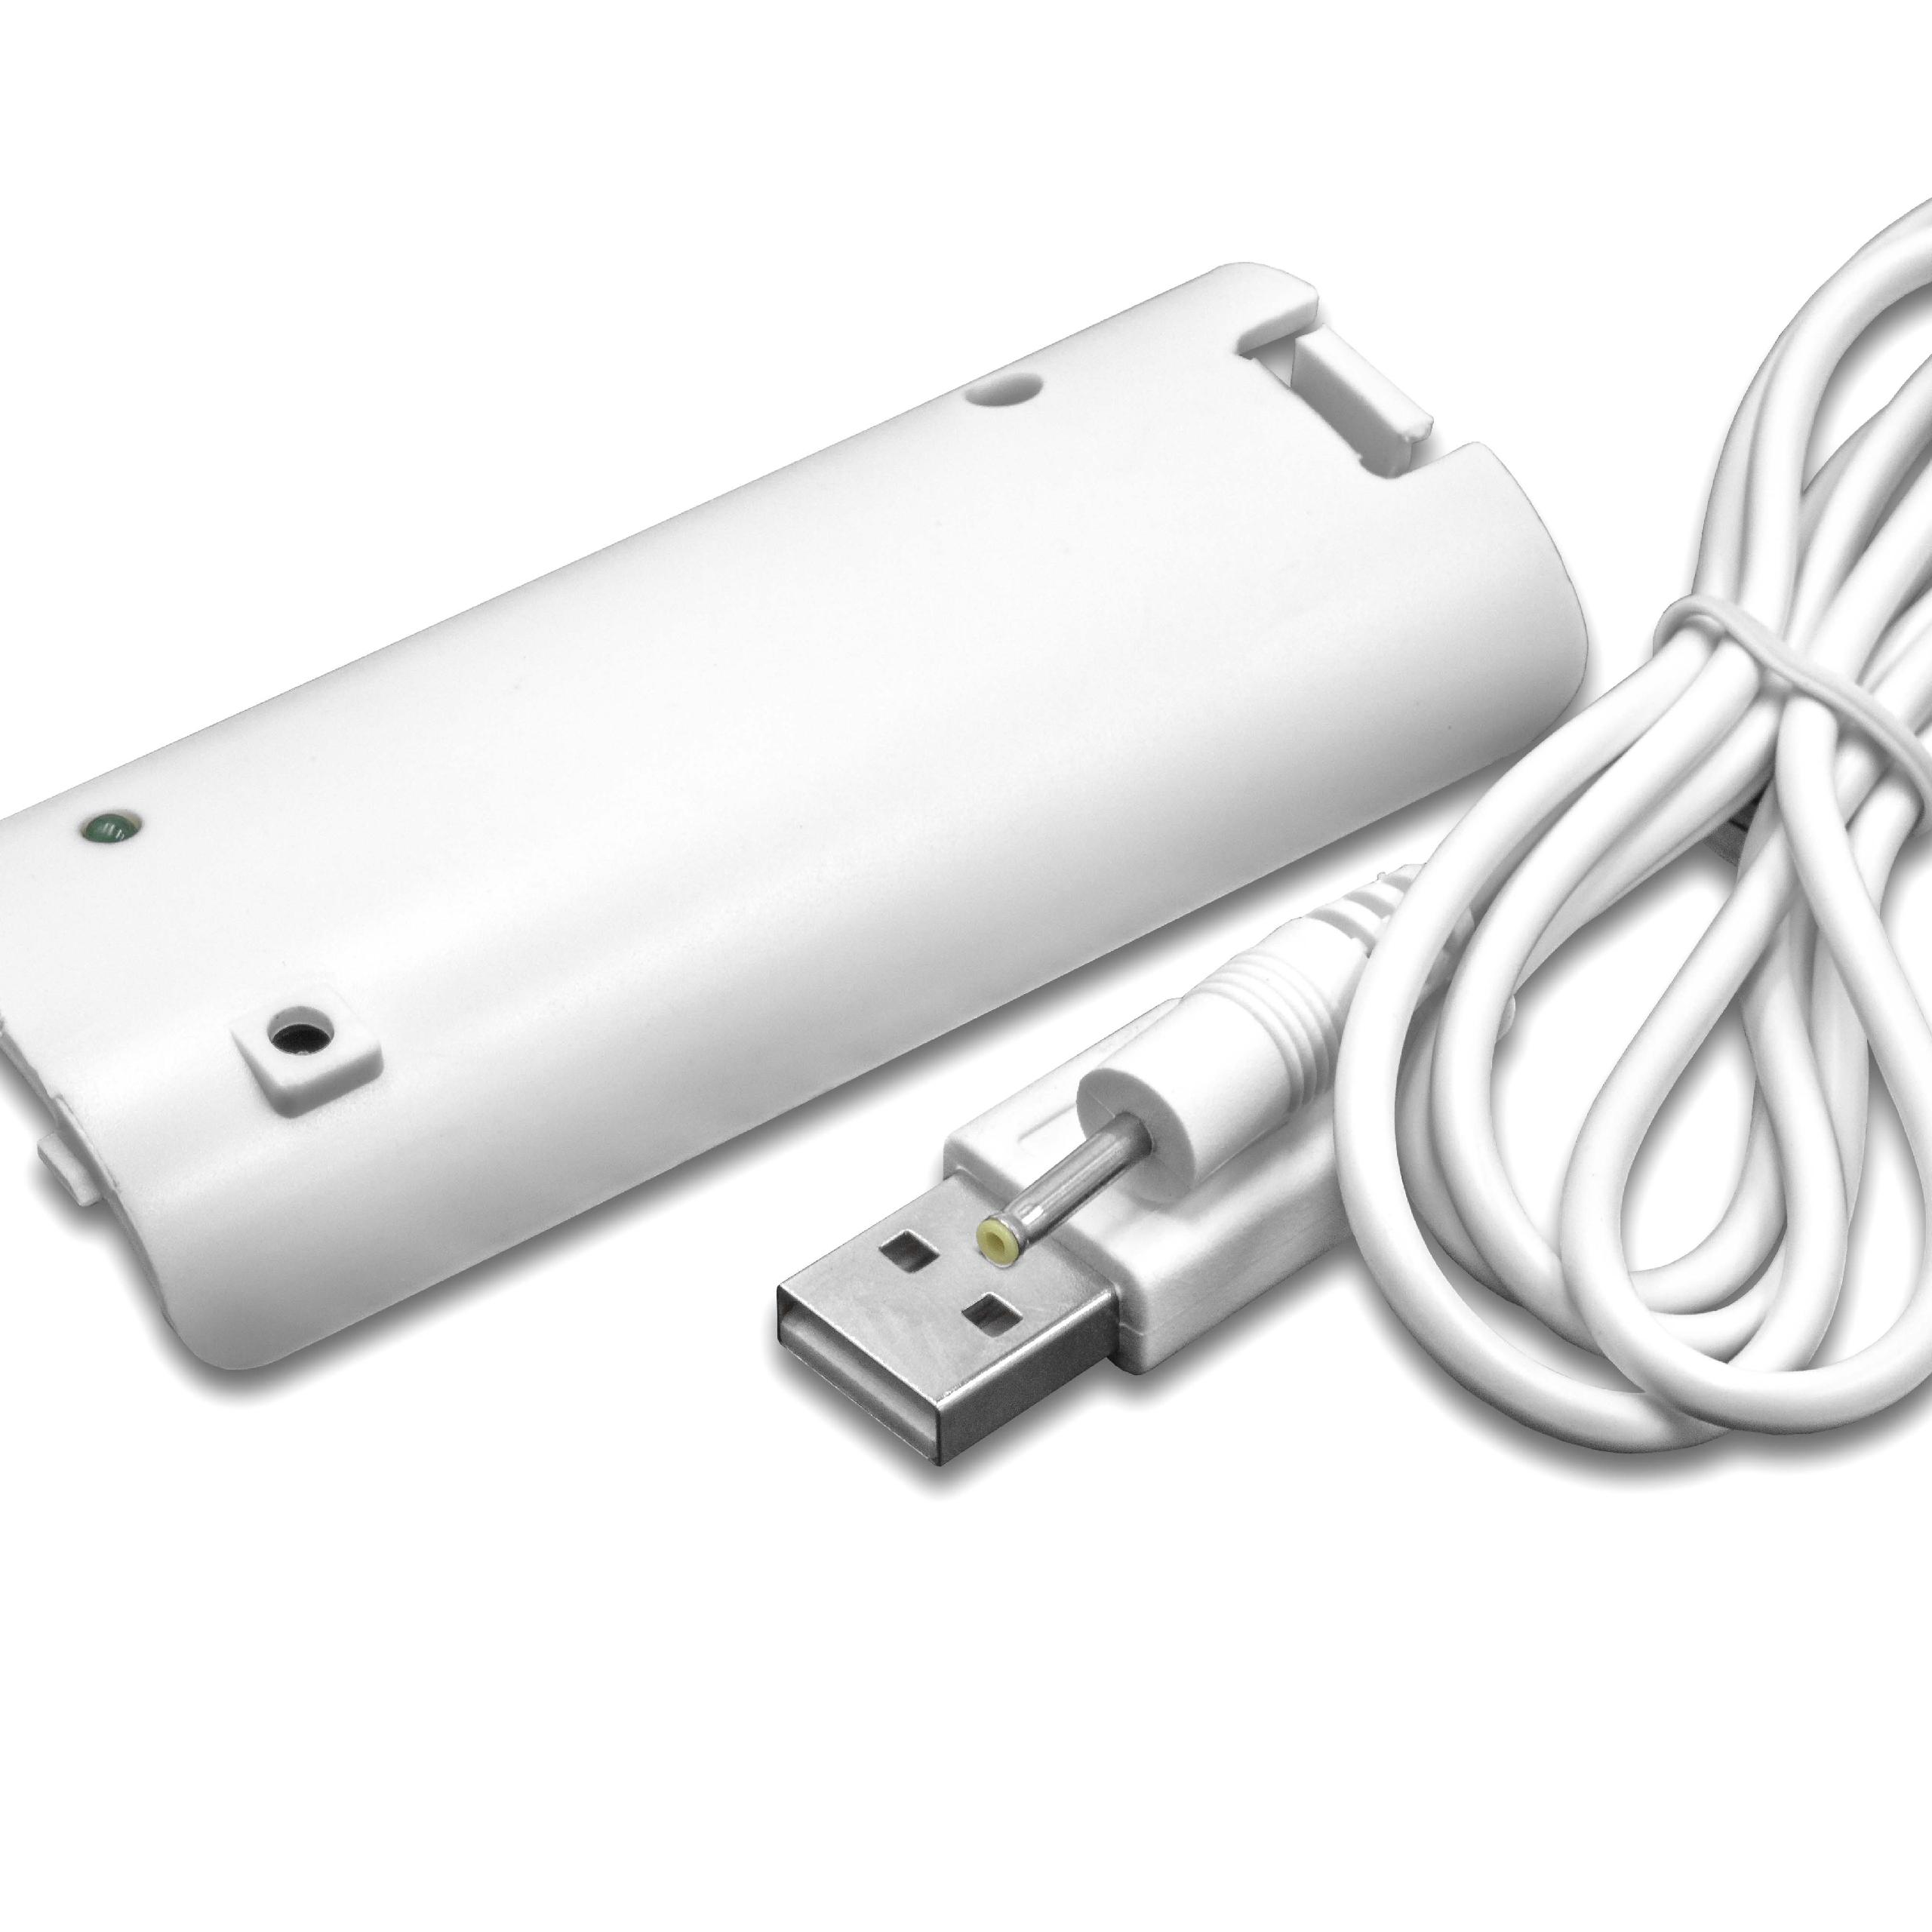 VHBW kompatibel mit Nintendo Volt, Akku Spielekonsole, Wii Controller, 400 Remote - 2.4 NiMH Plus